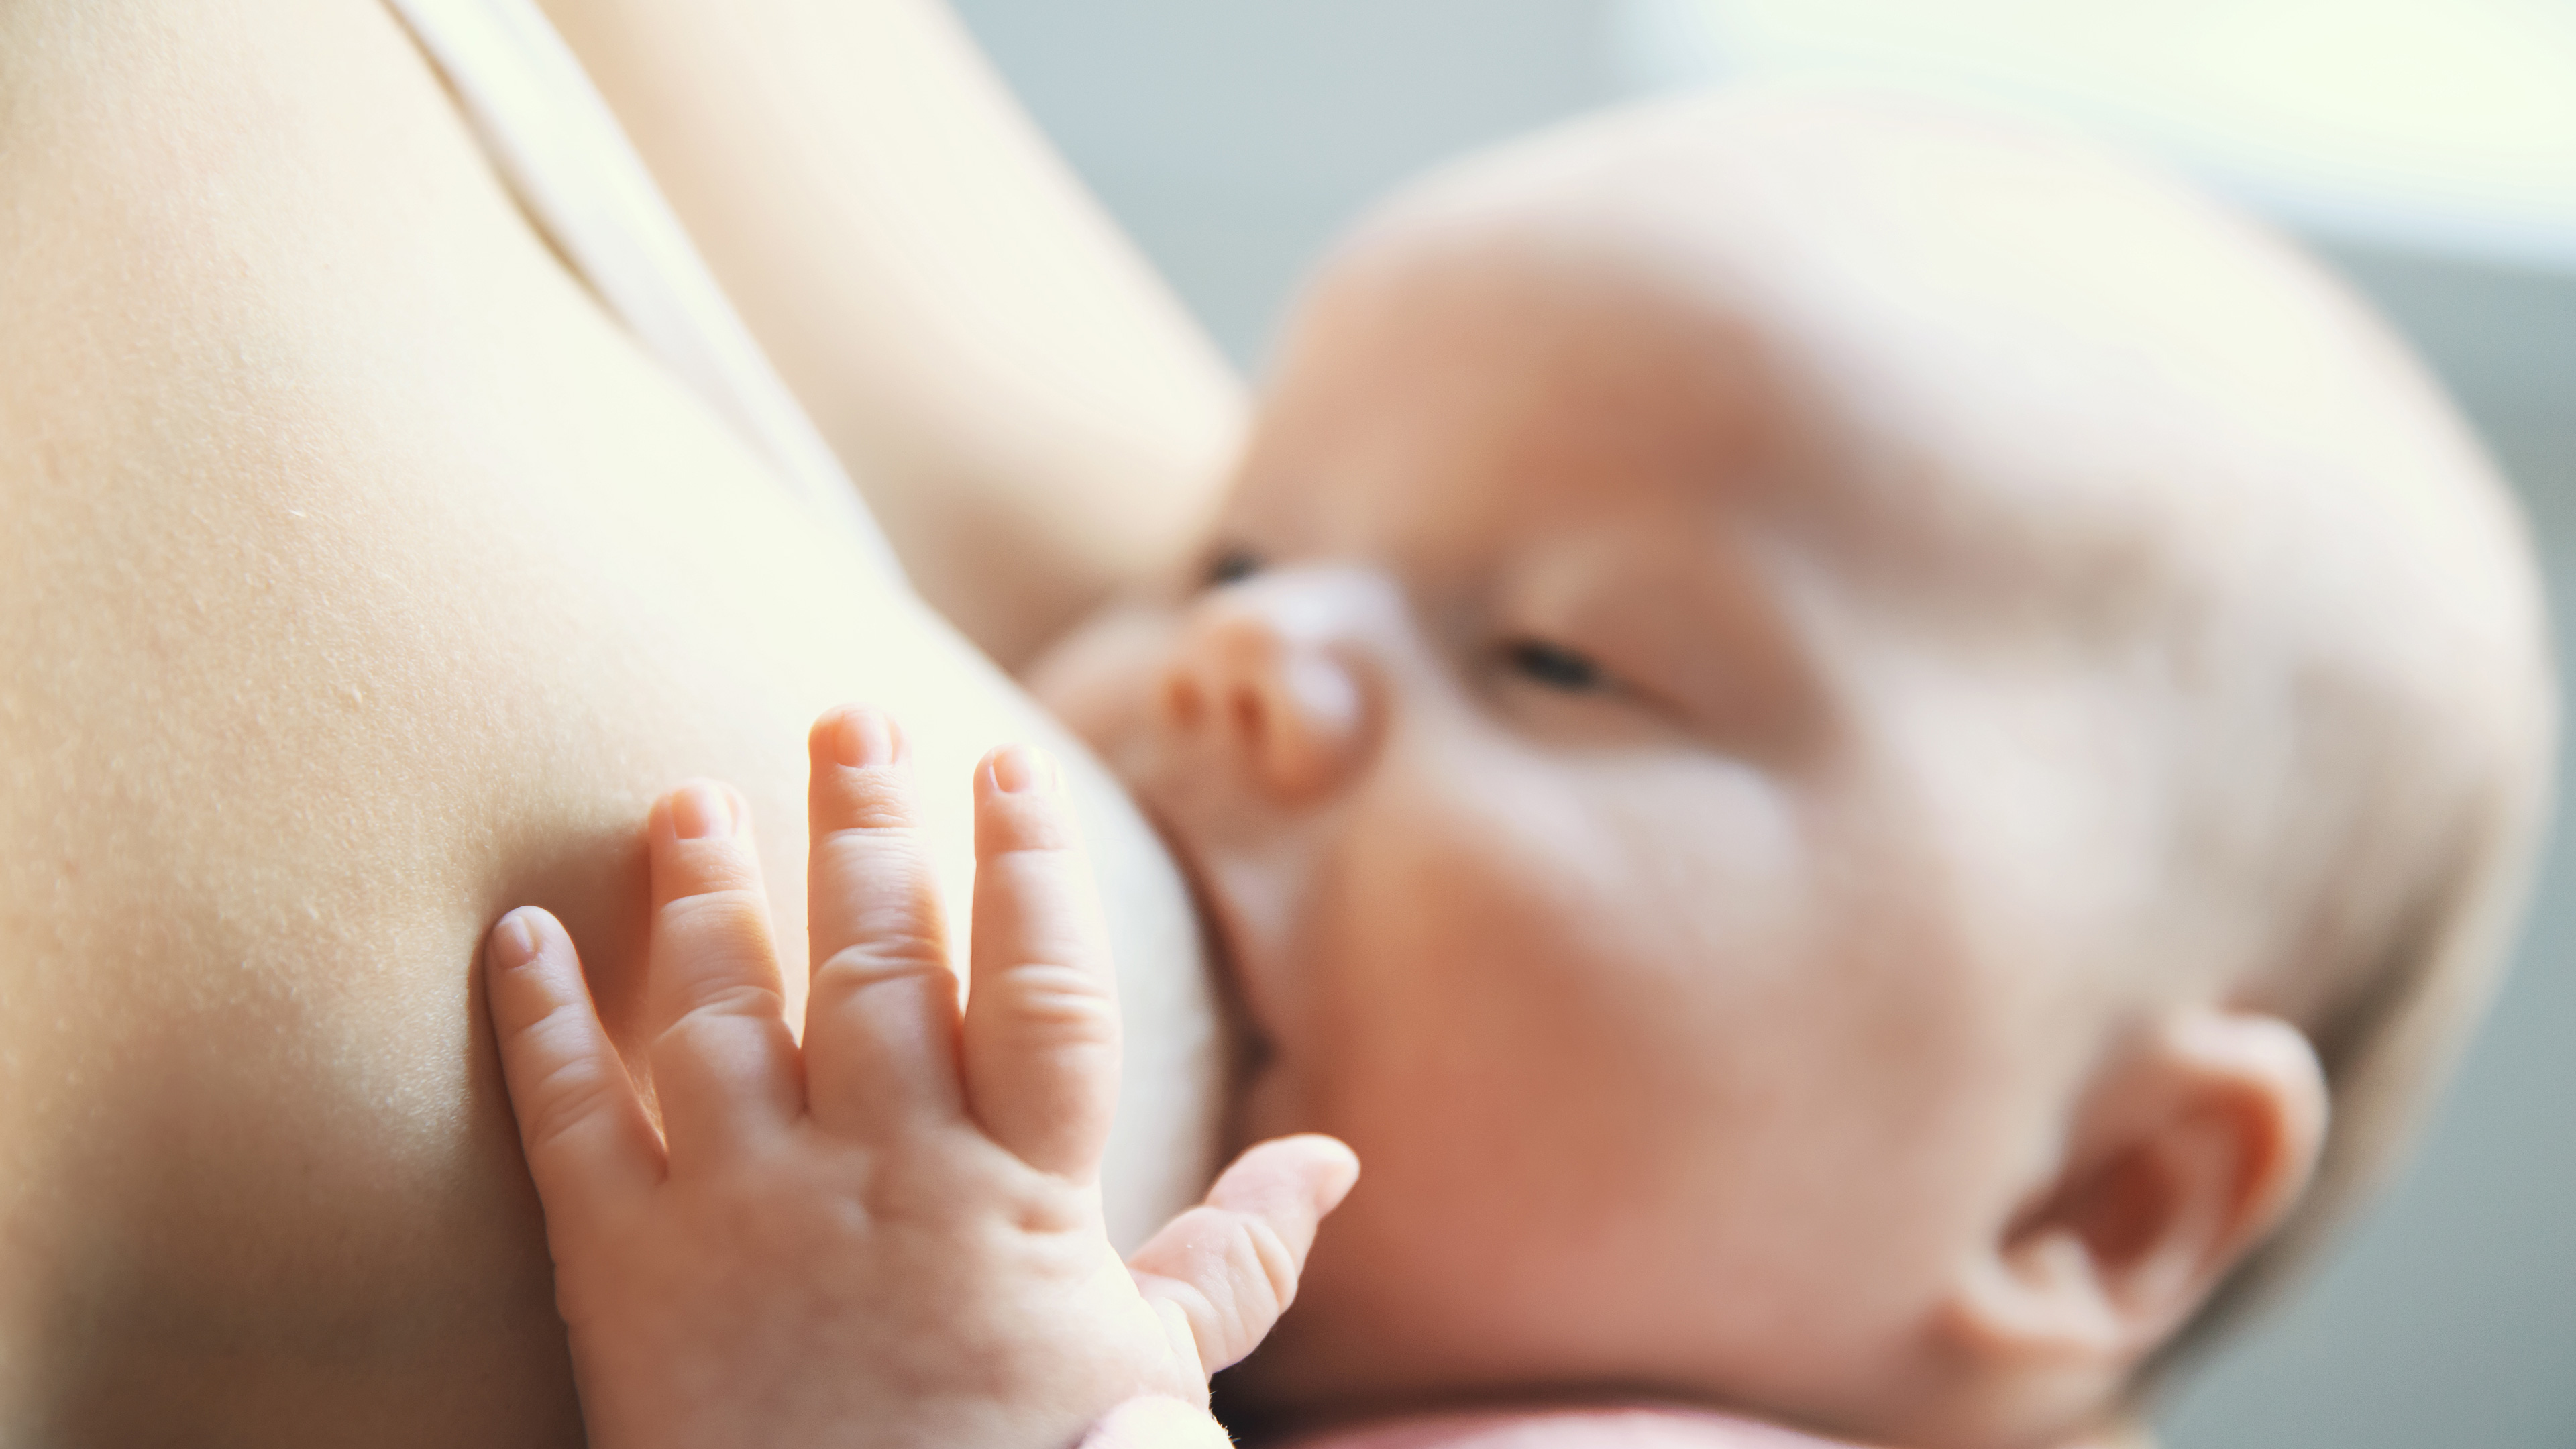 Breastfeeding Essentials for Mama - Simple Living Mama